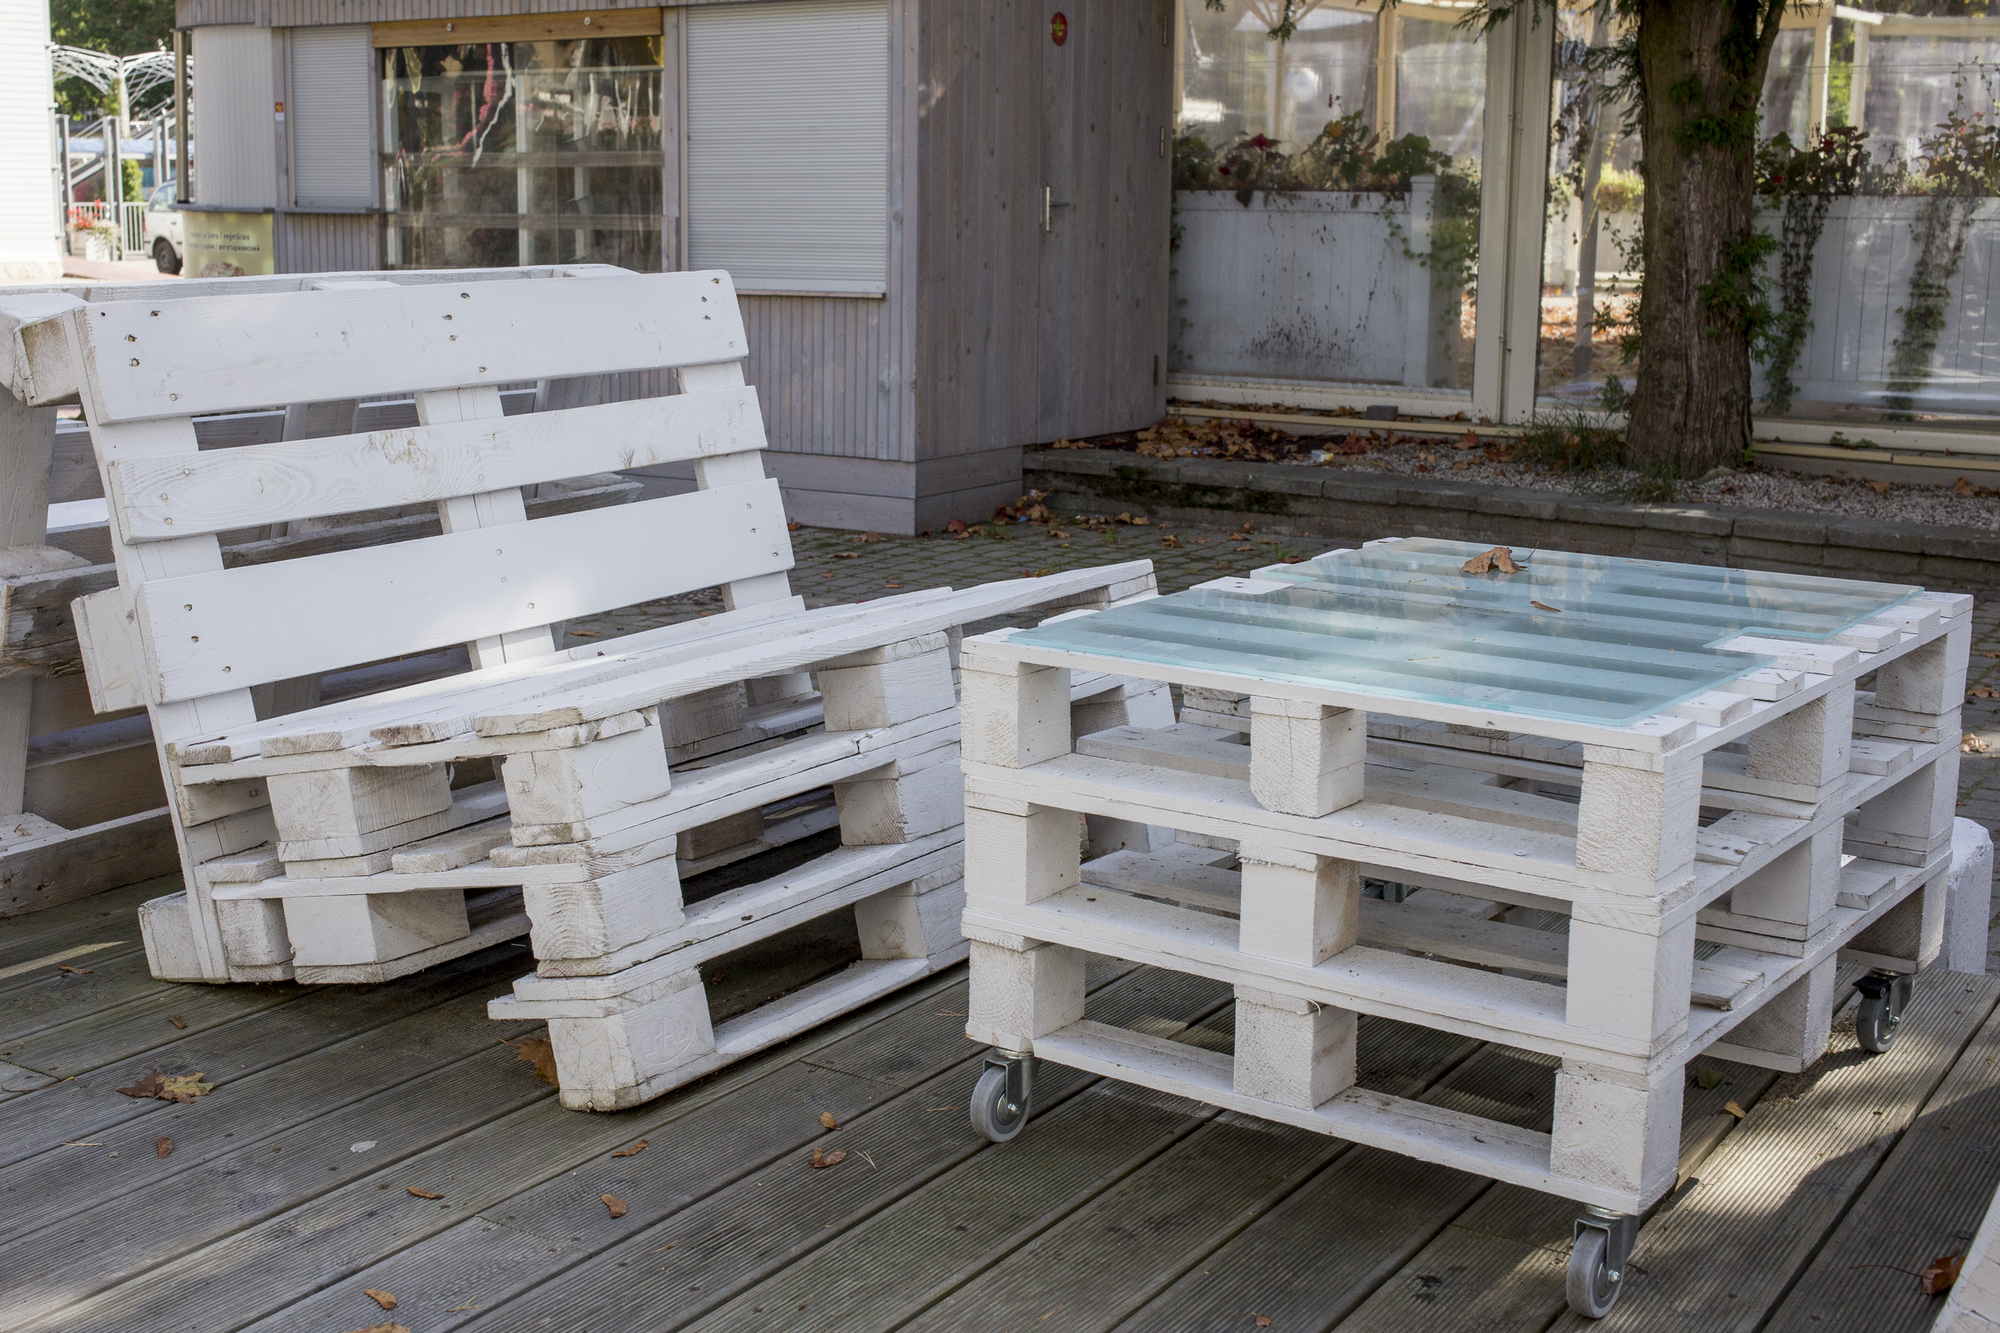 Wooden outdoor furniture from white pallets. Modern bar design.